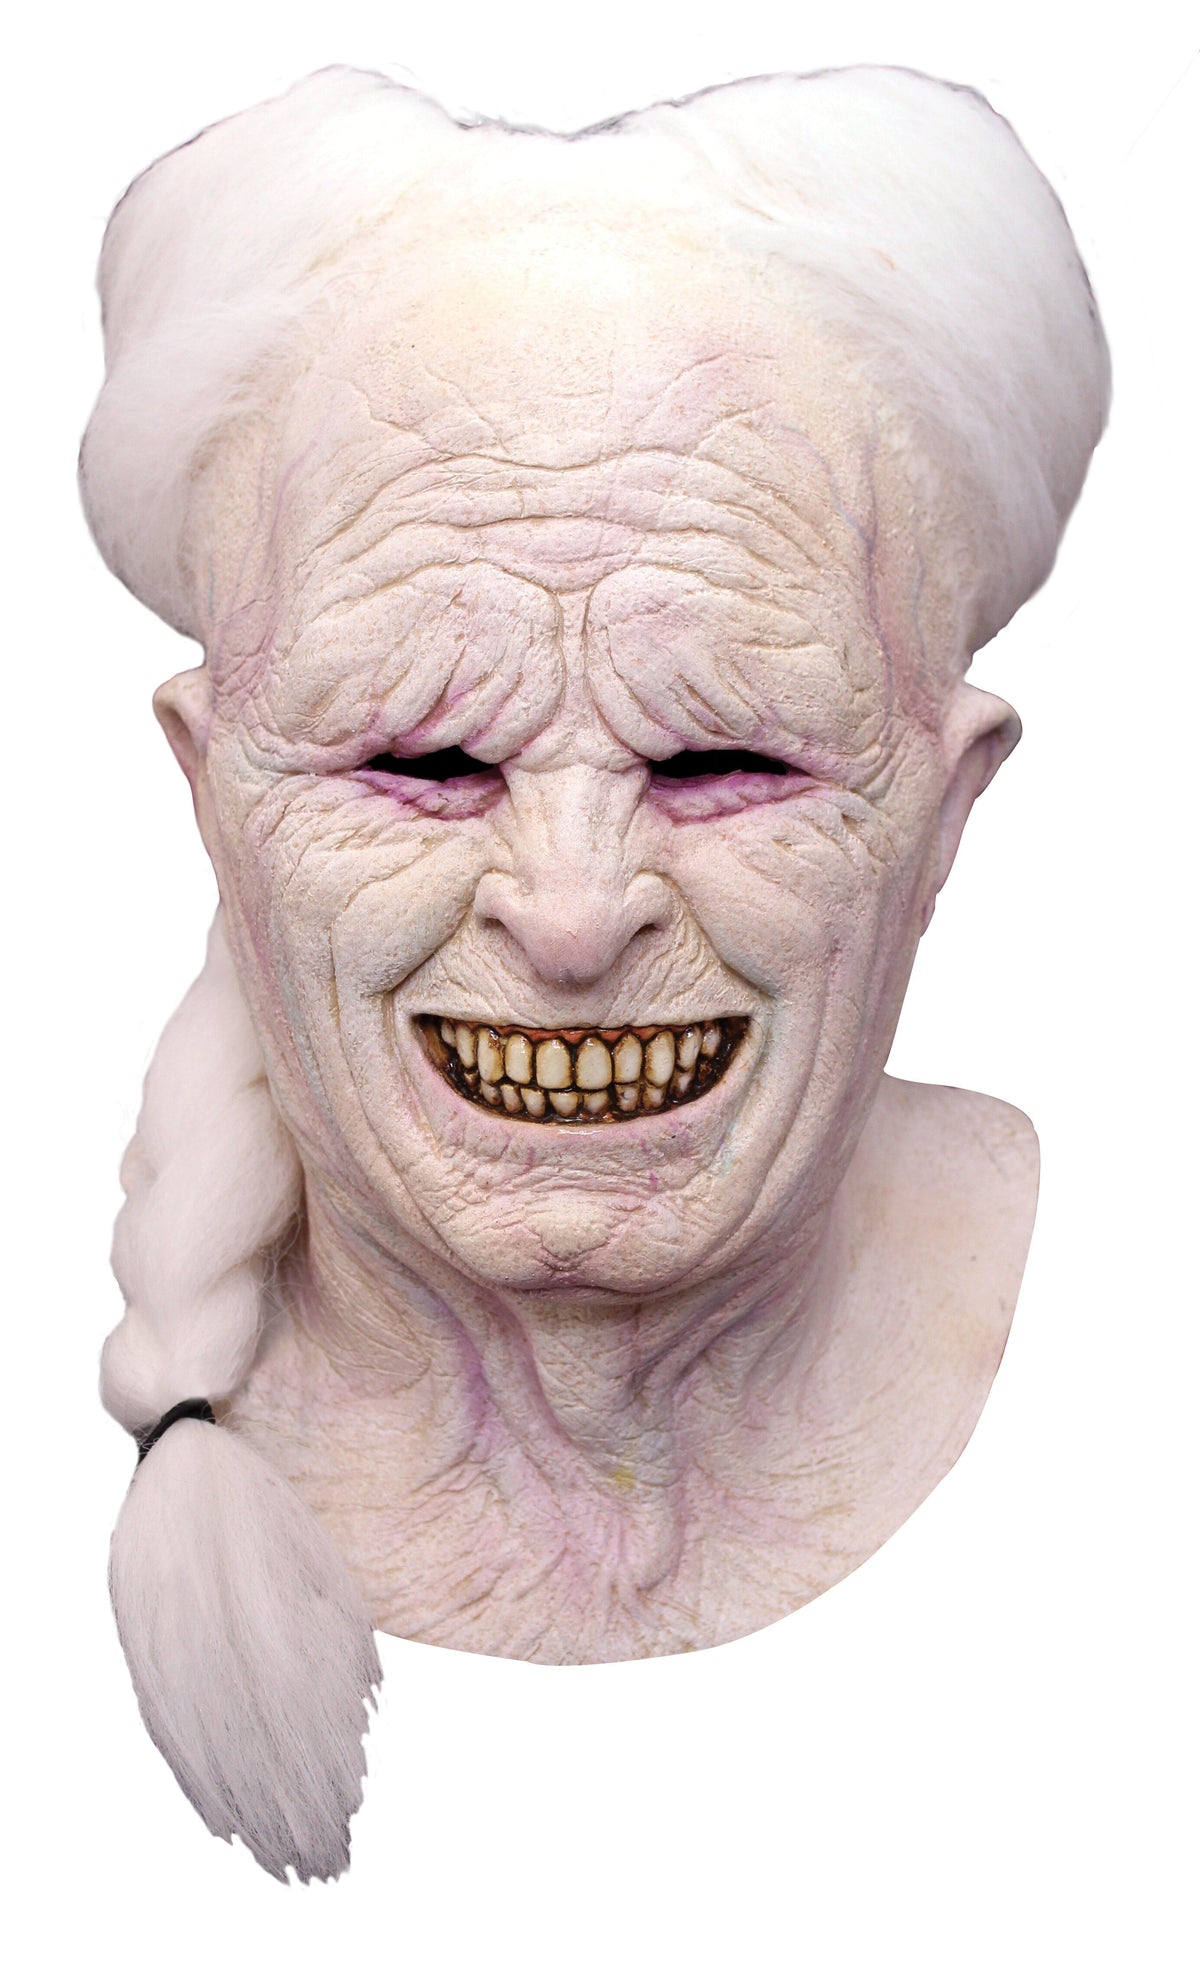 Bram Stoker's Dracula: Dracula Deluxe Latex Mask